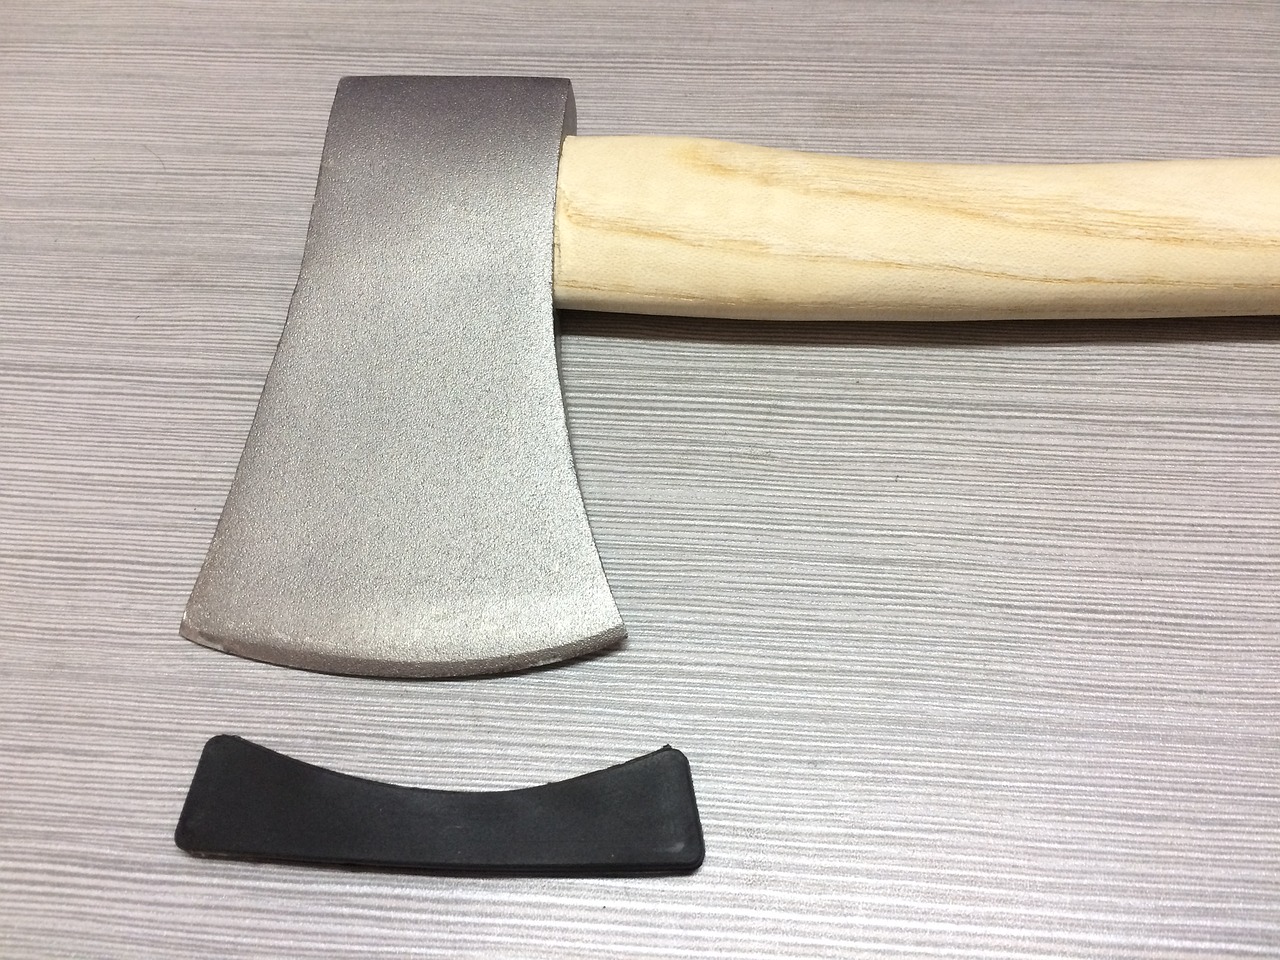 ax tools wooden handle axe free photo